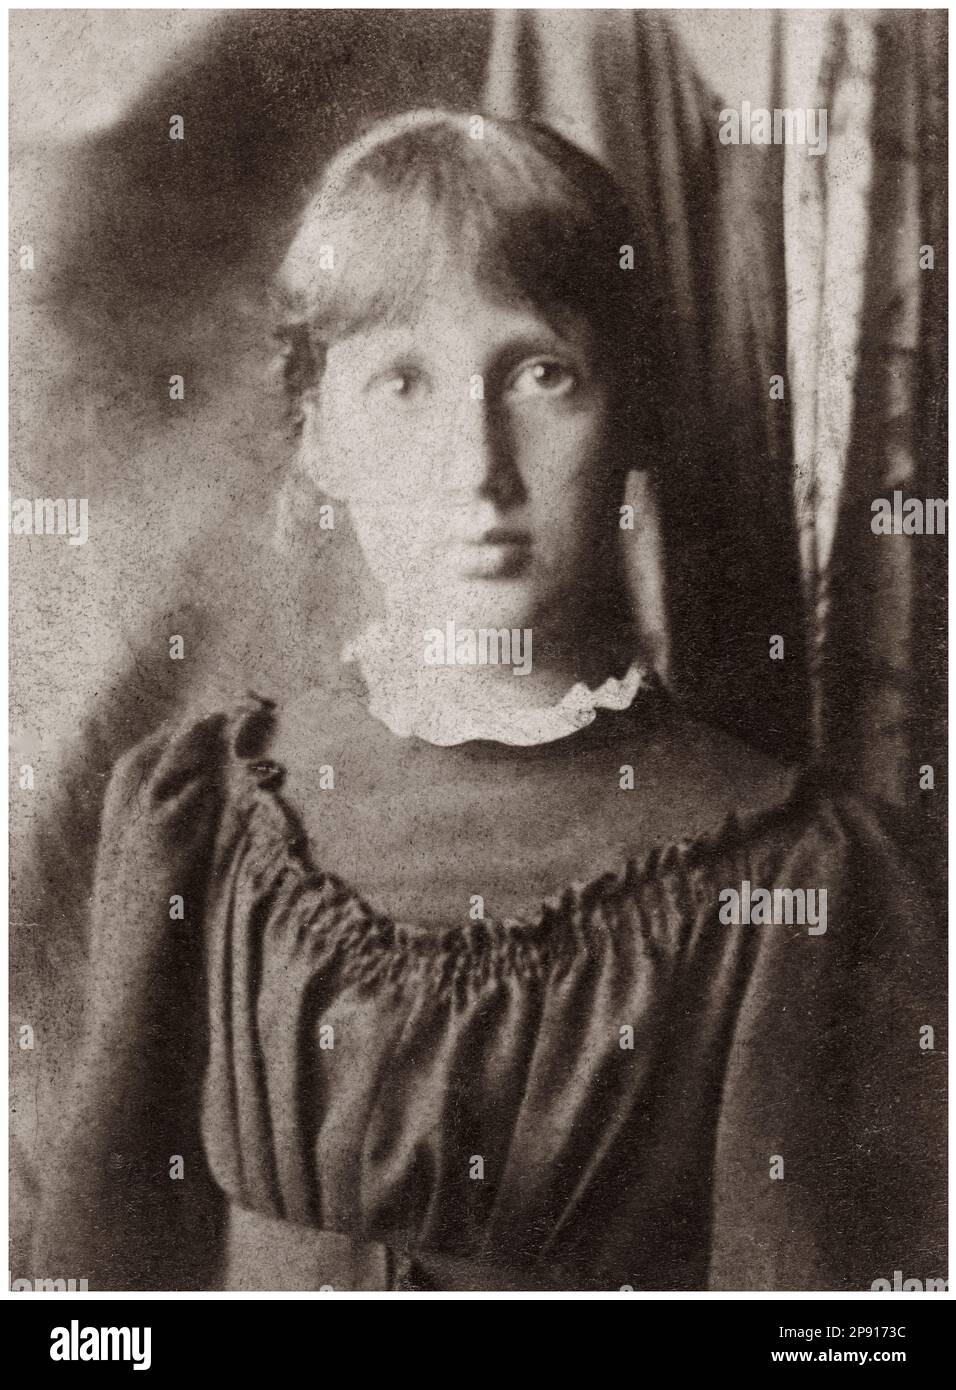 Virginia Stephen (Virginia Woolf), (1882-1941), as a teenager, portrait photograph, 1895 Stock Photo